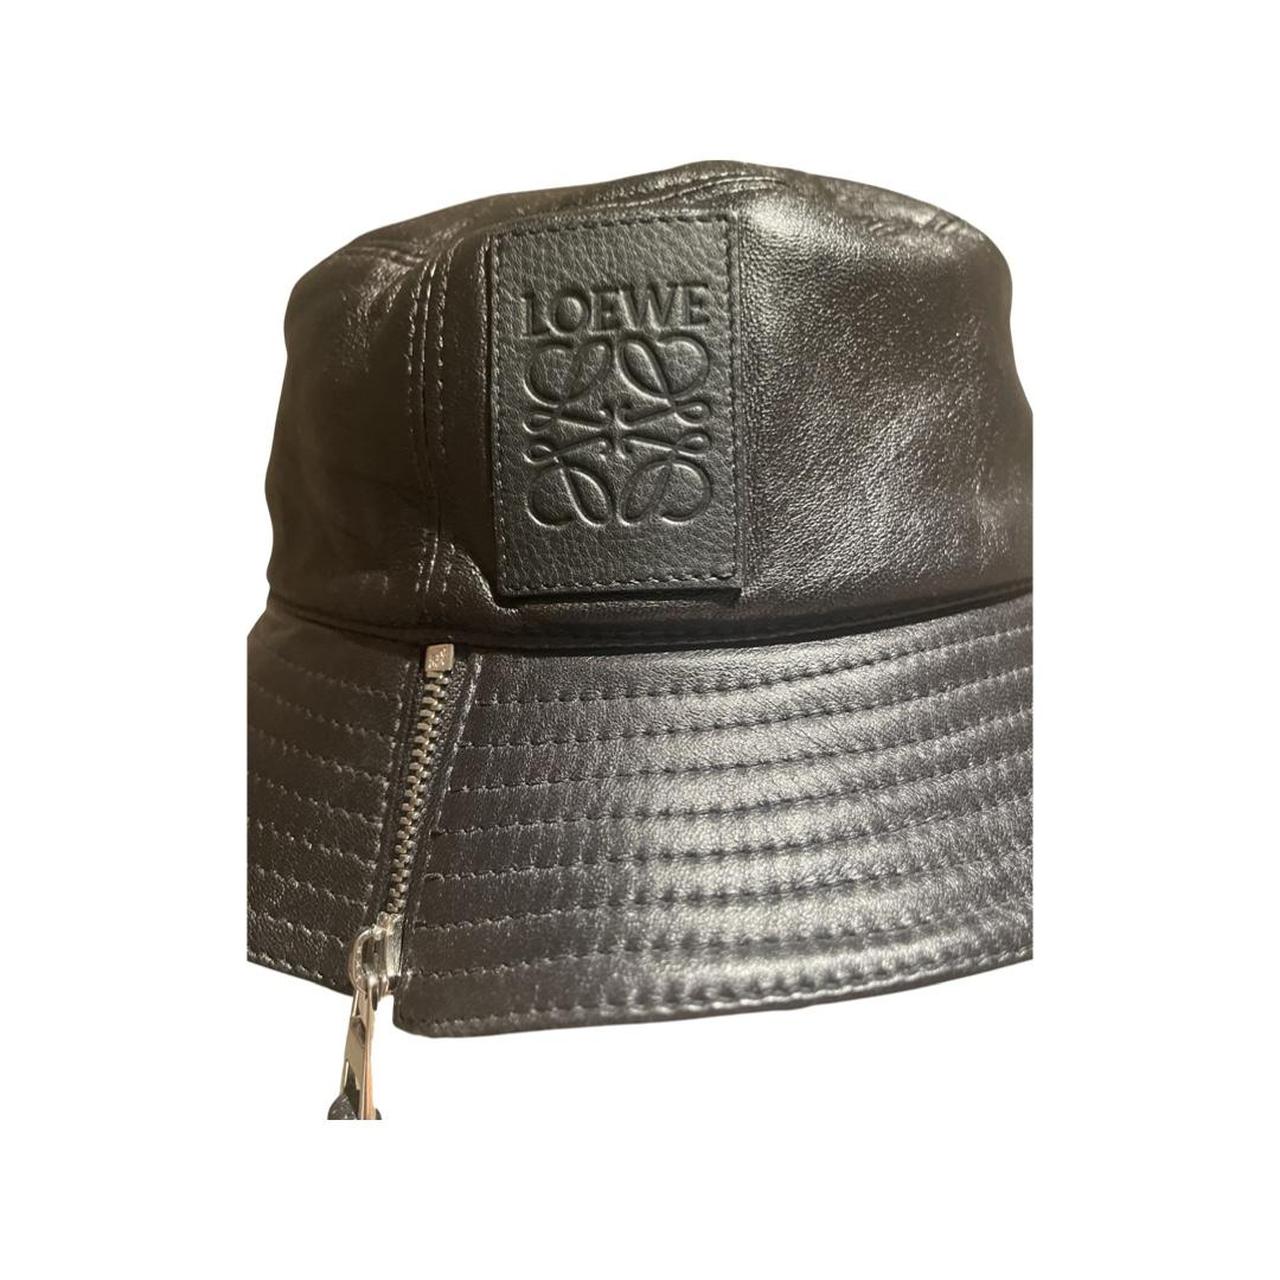 Leather Louis Vuitton bucket hat #designer #mint - Depop